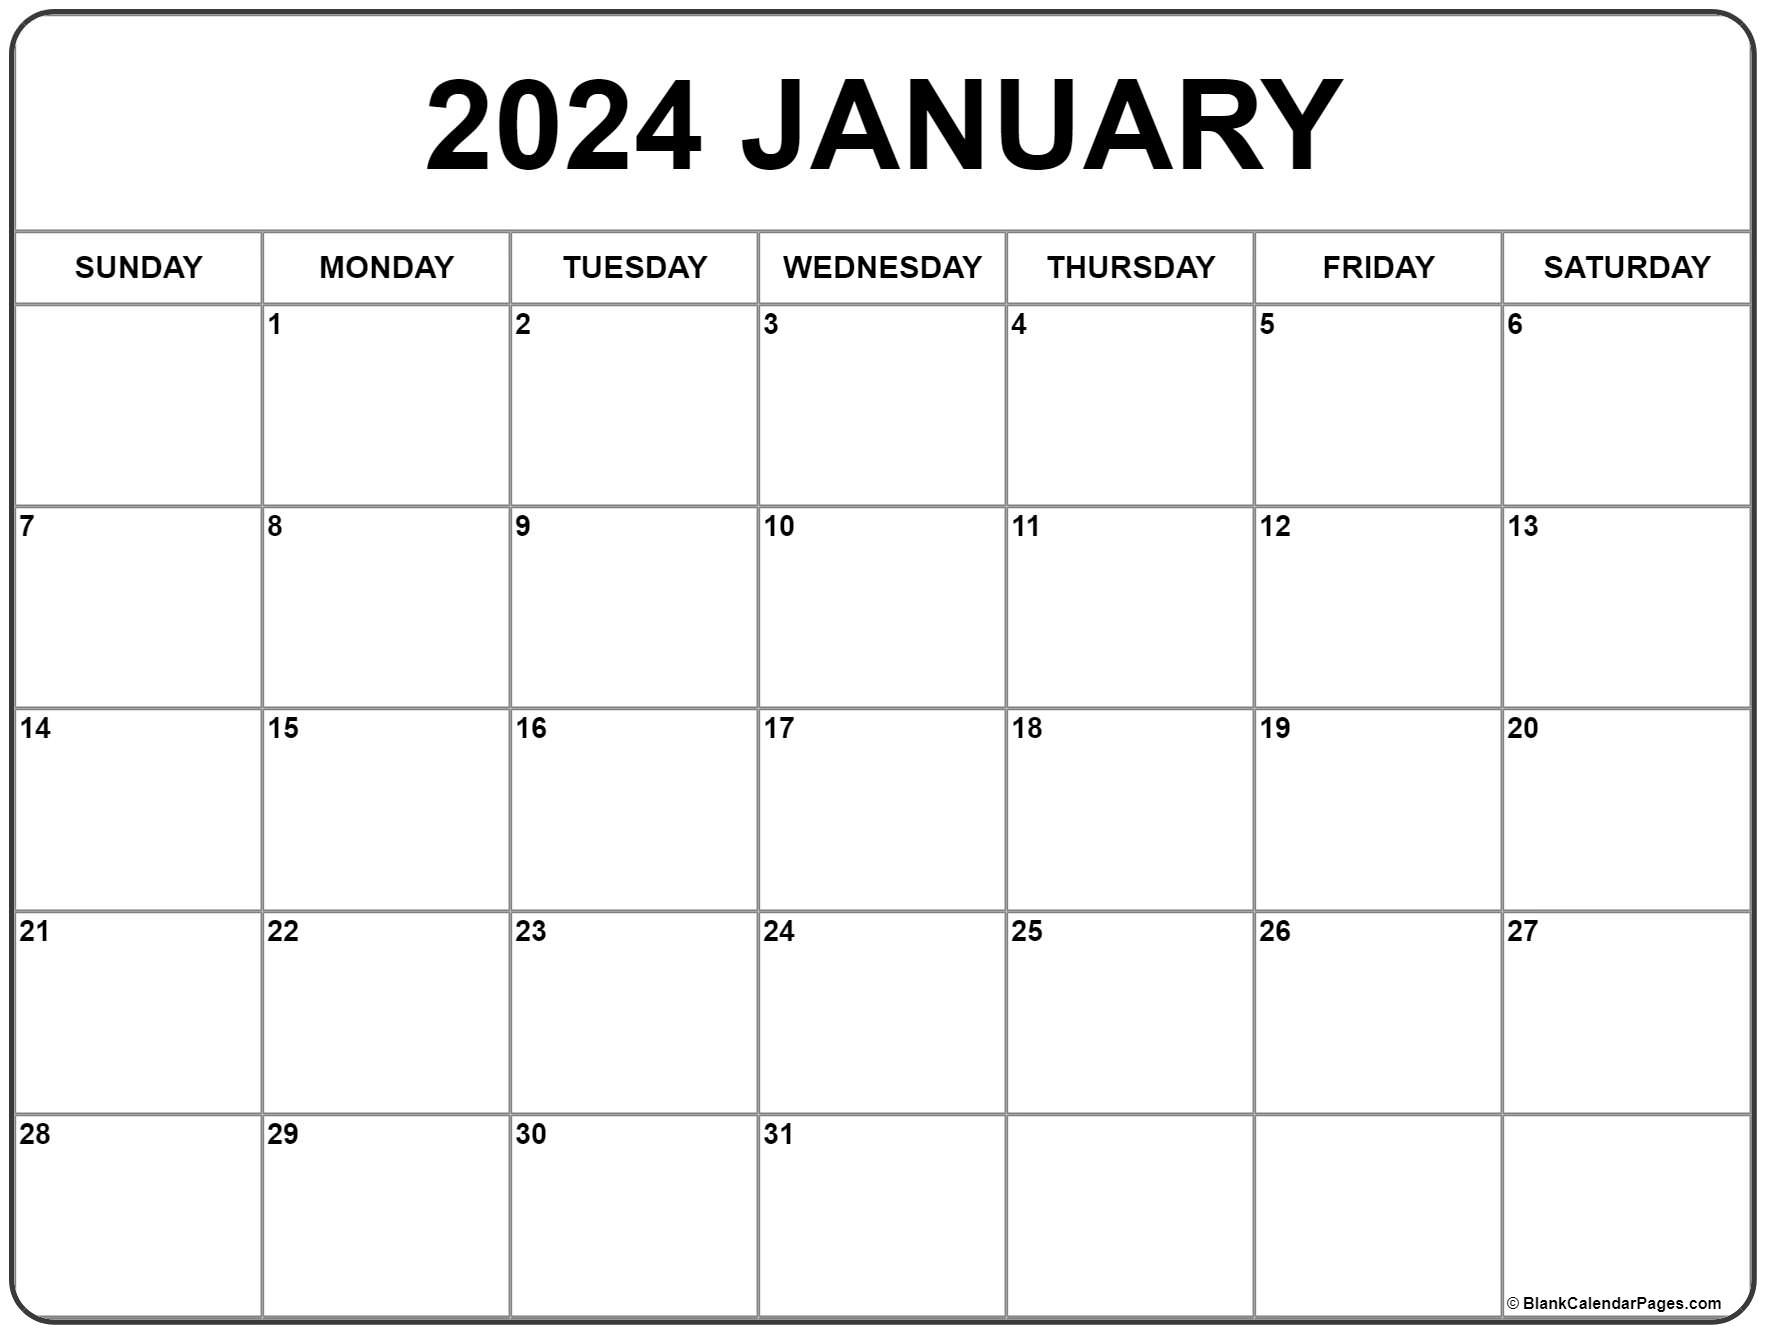 January 2024 Calendar | Free Printable Calendar for Jan 2024 Printable Calendar Free